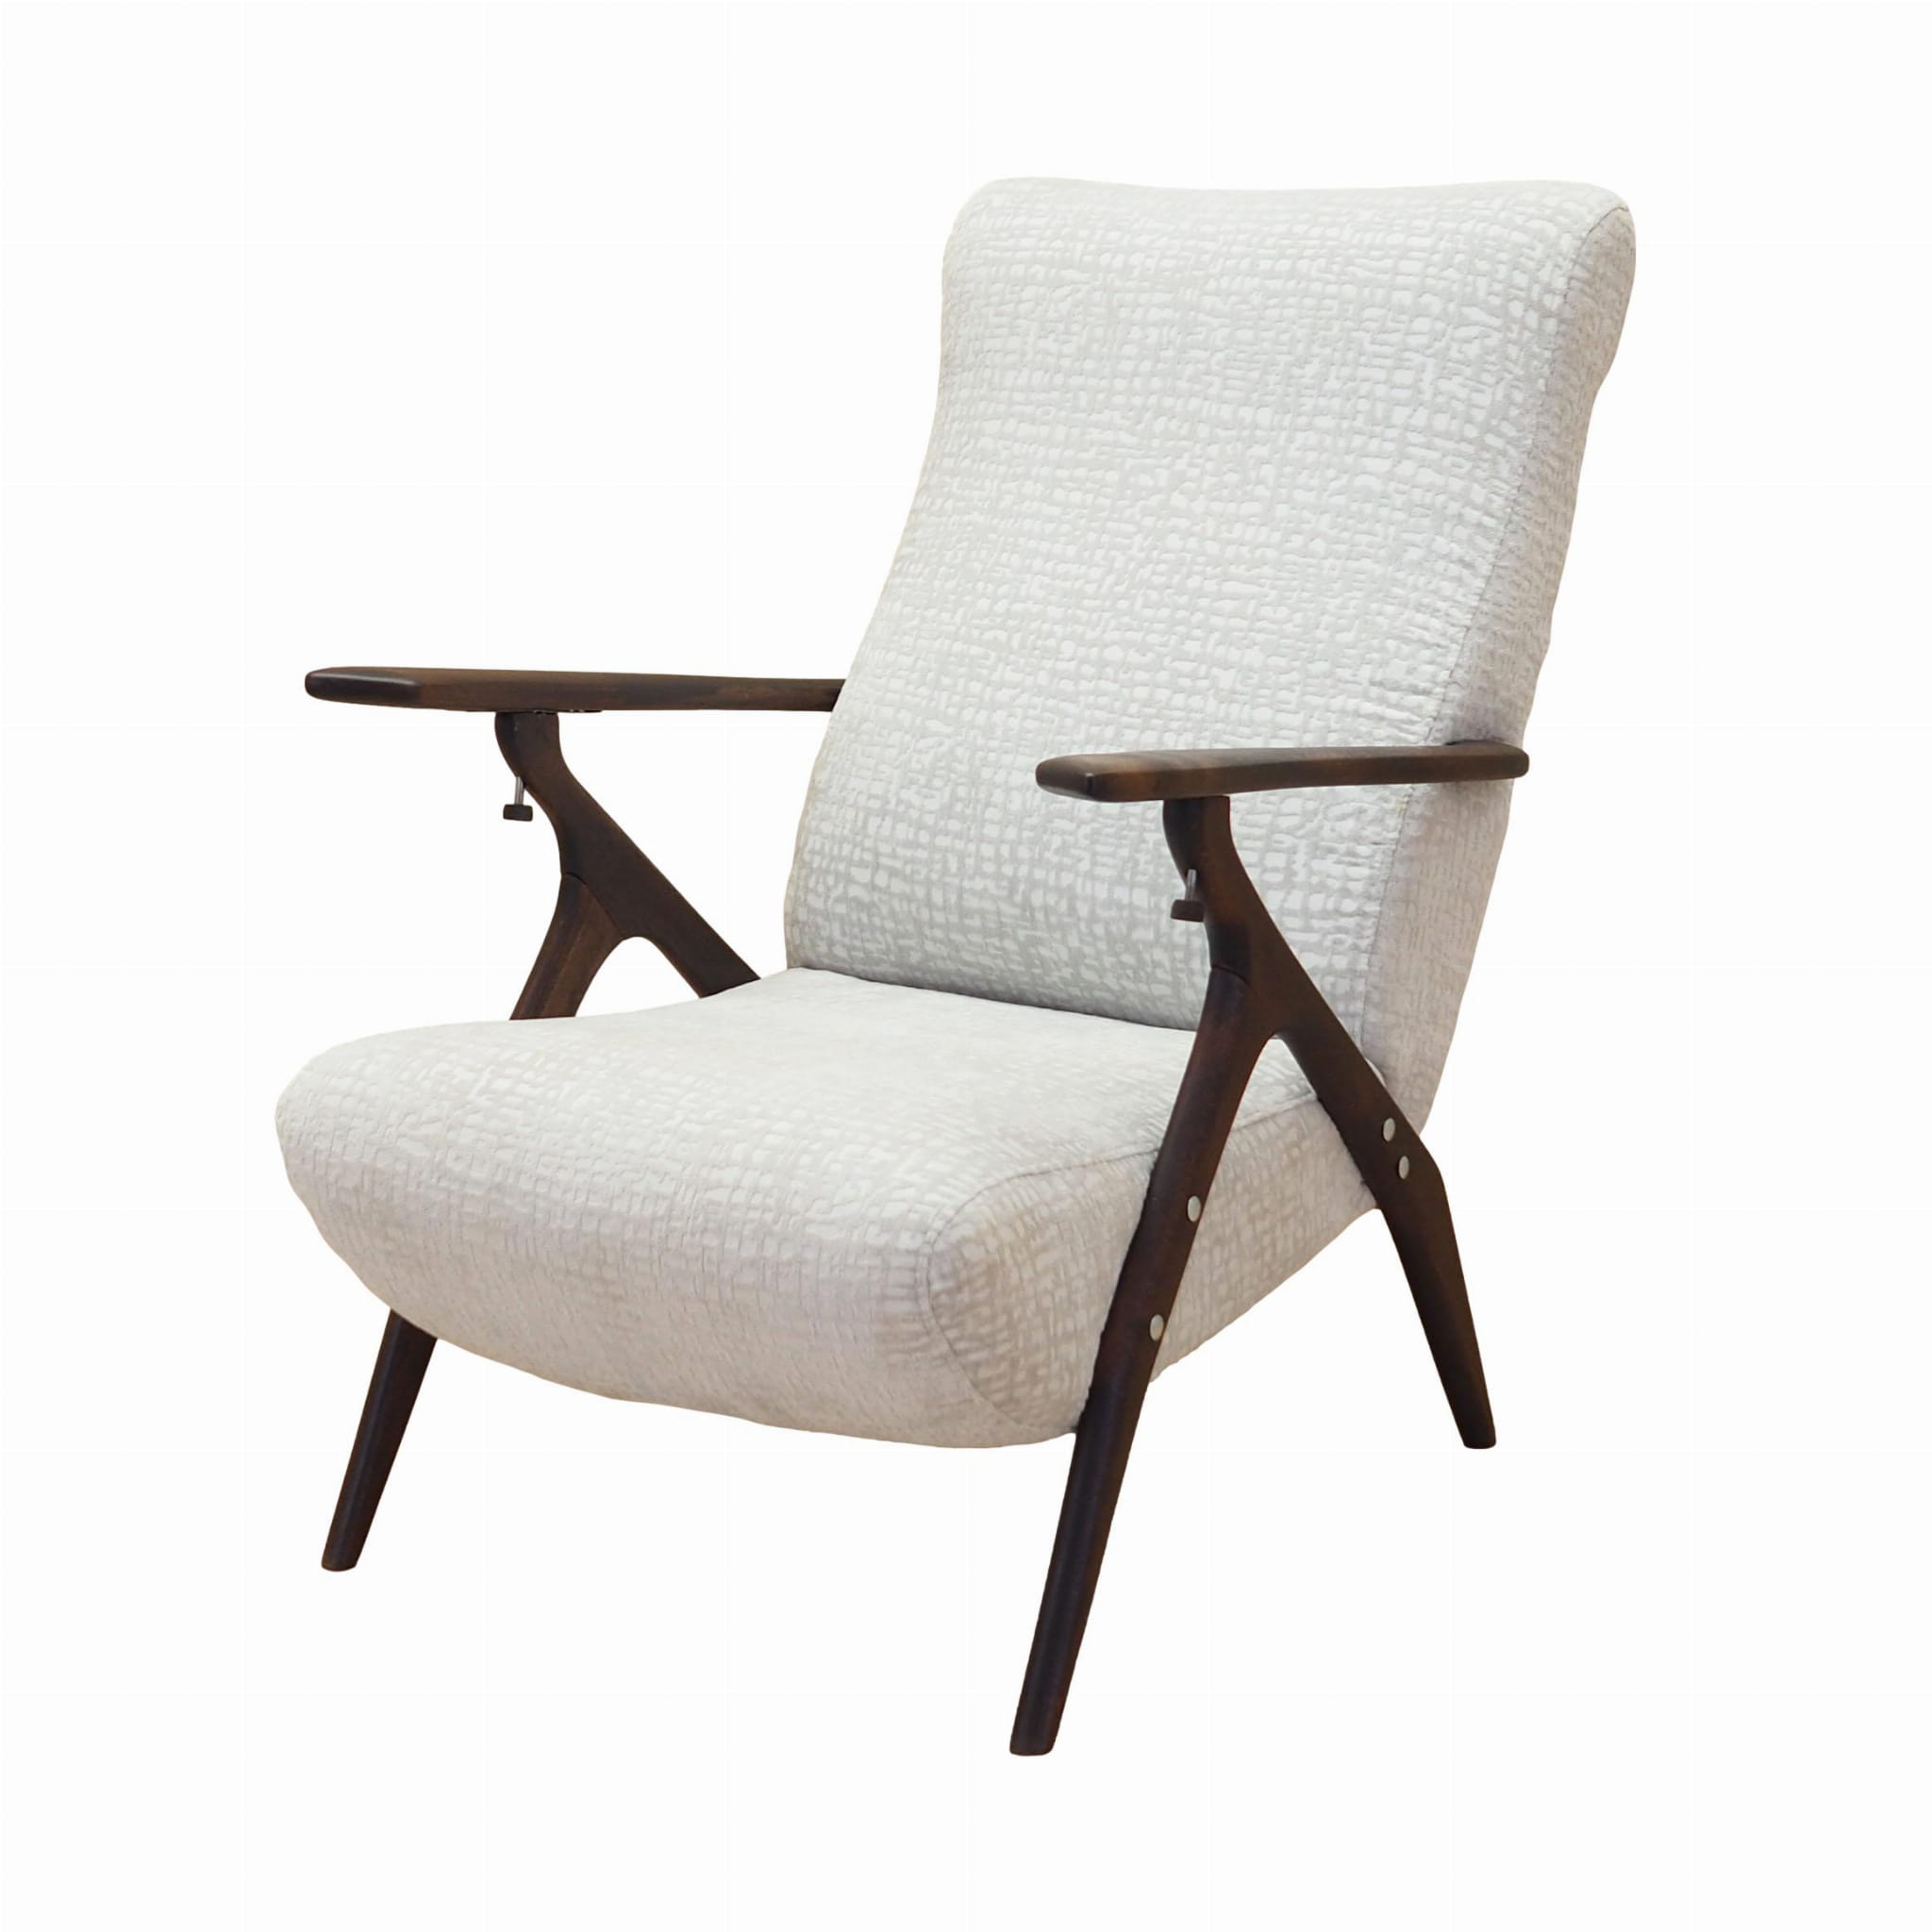 Vintage Sessel Buchenholz Textil Weiß 1970er Jahre